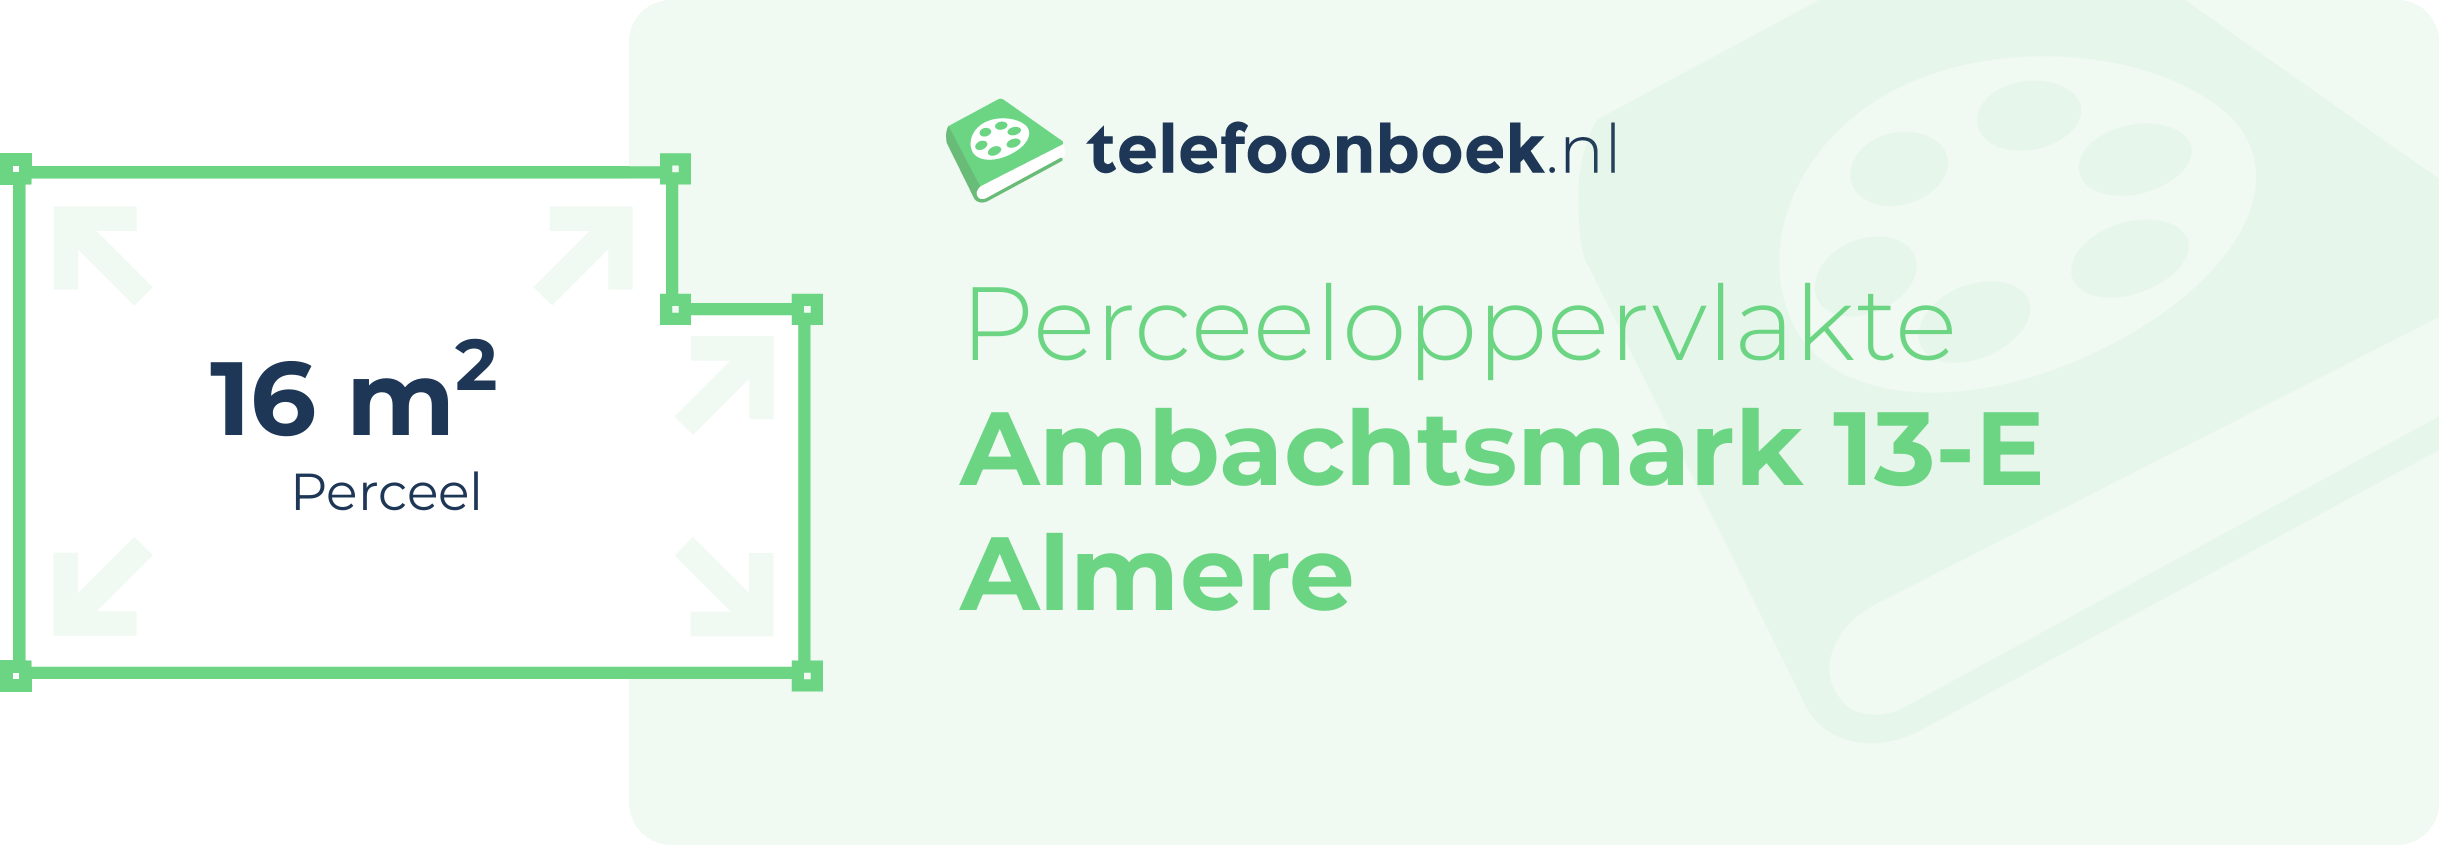 Perceeloppervlakte Ambachtsmark 13-E Almere